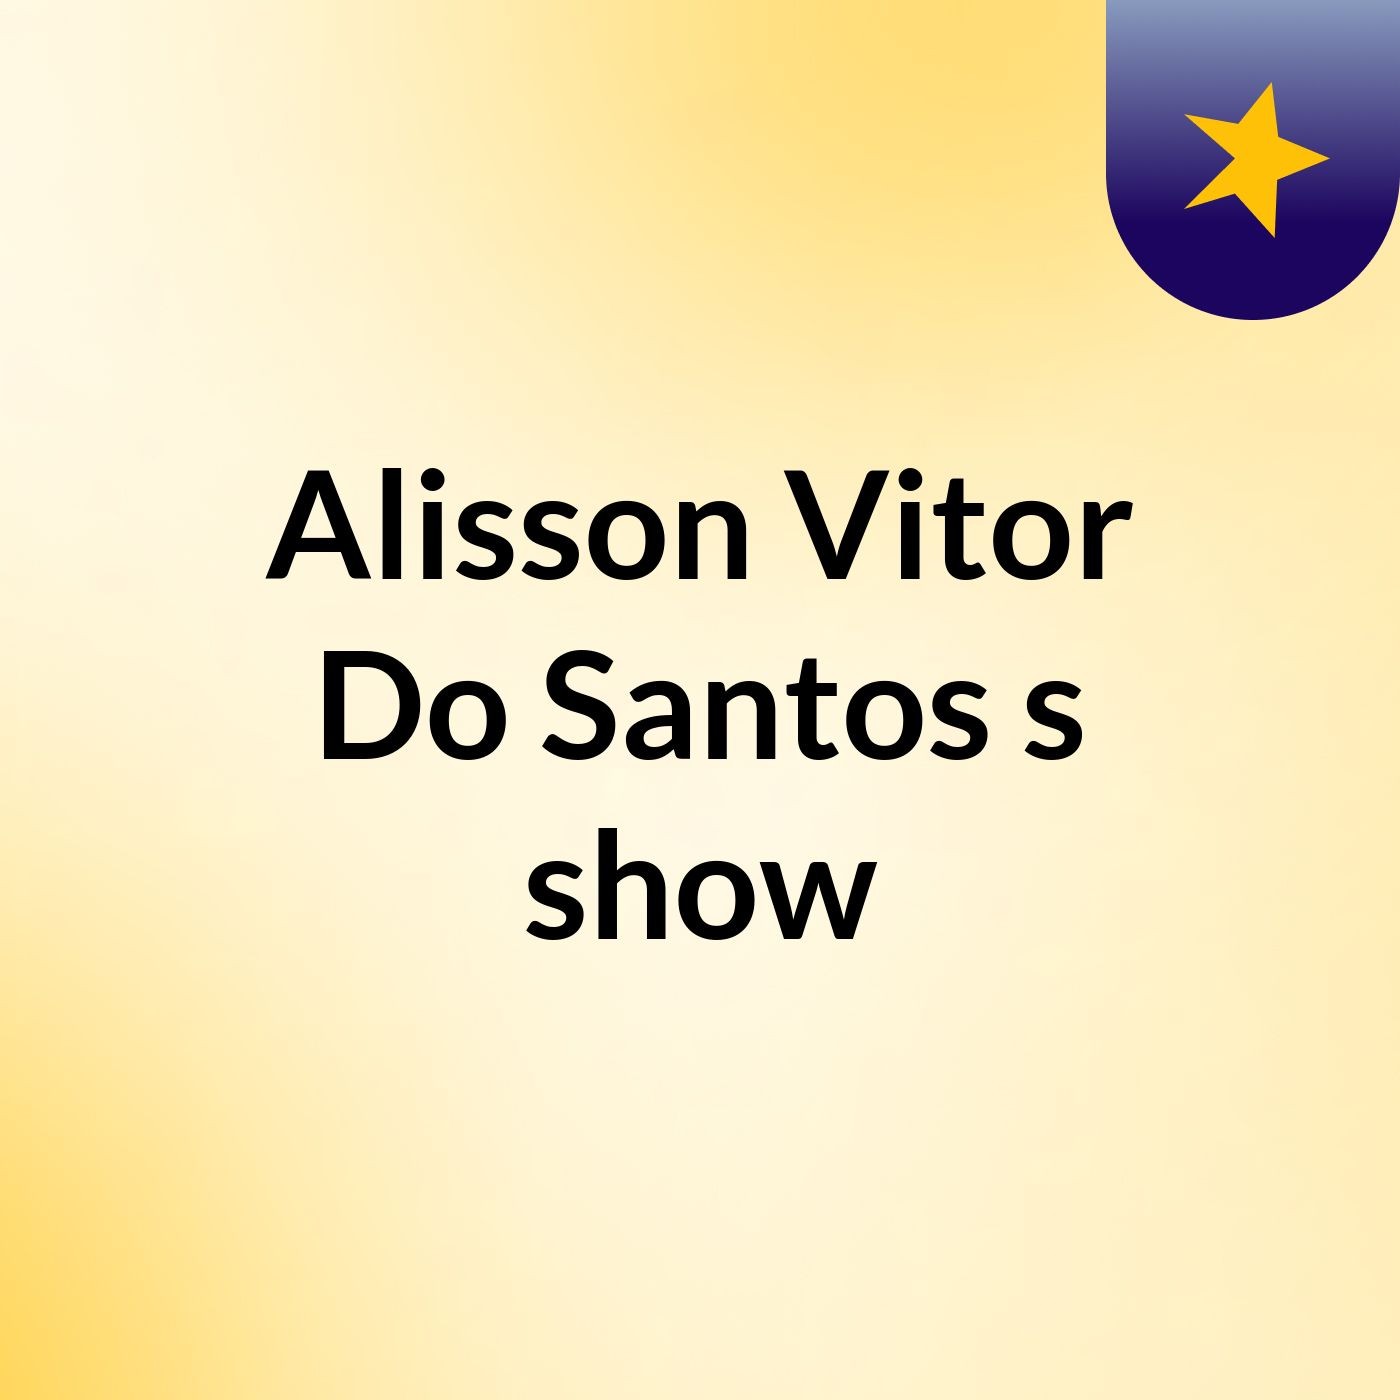 Alisson Vitor Do Santos's show